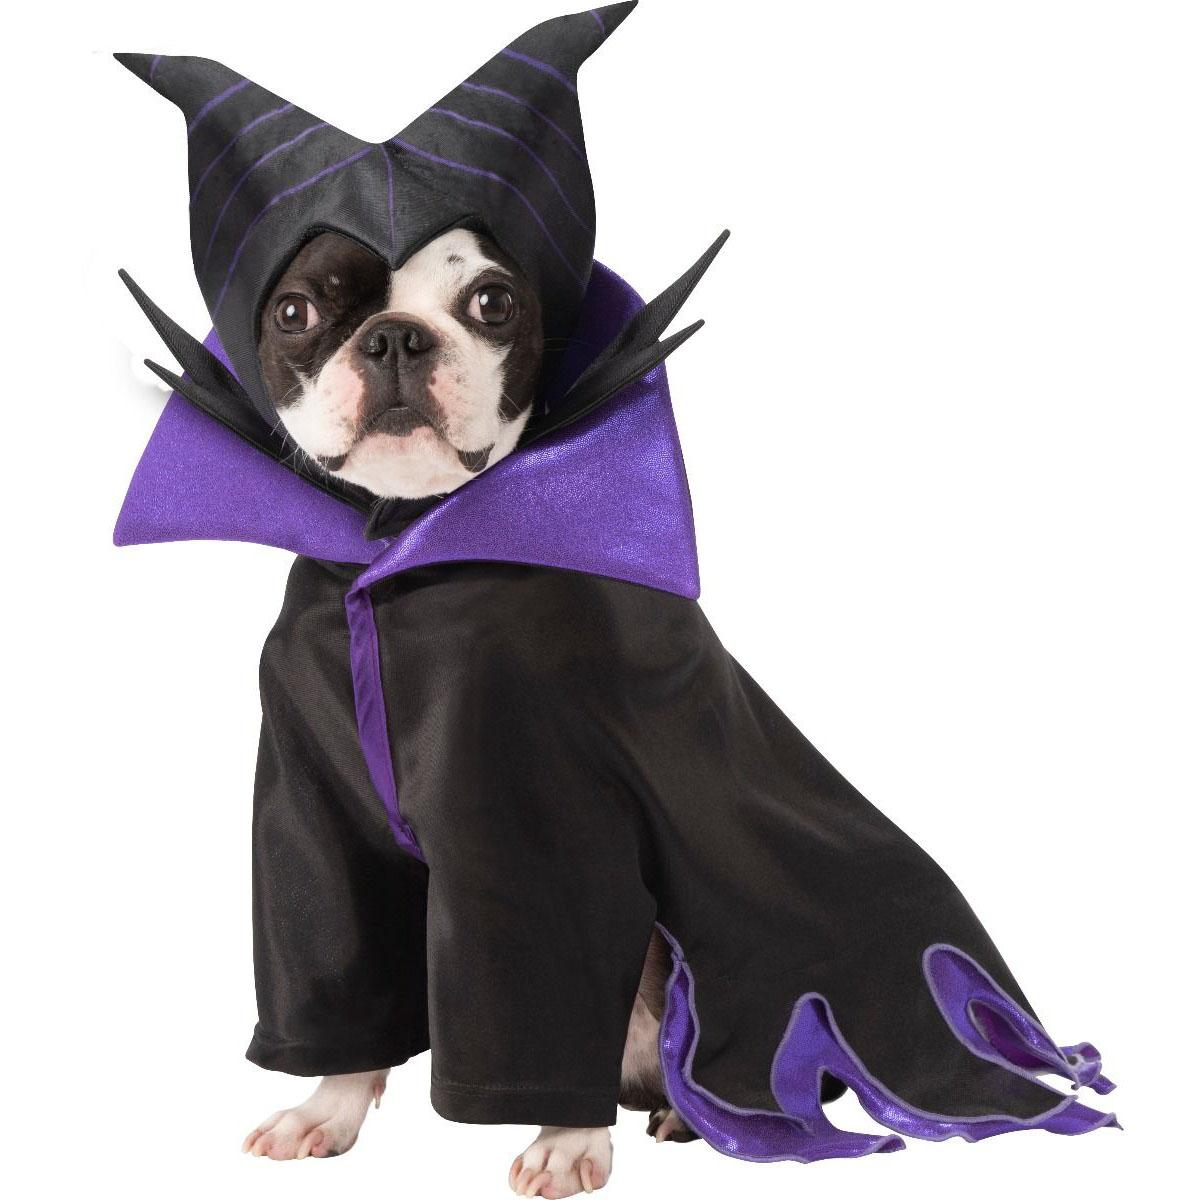 Disney Villains Maleficent Dog Costume by Rubie's